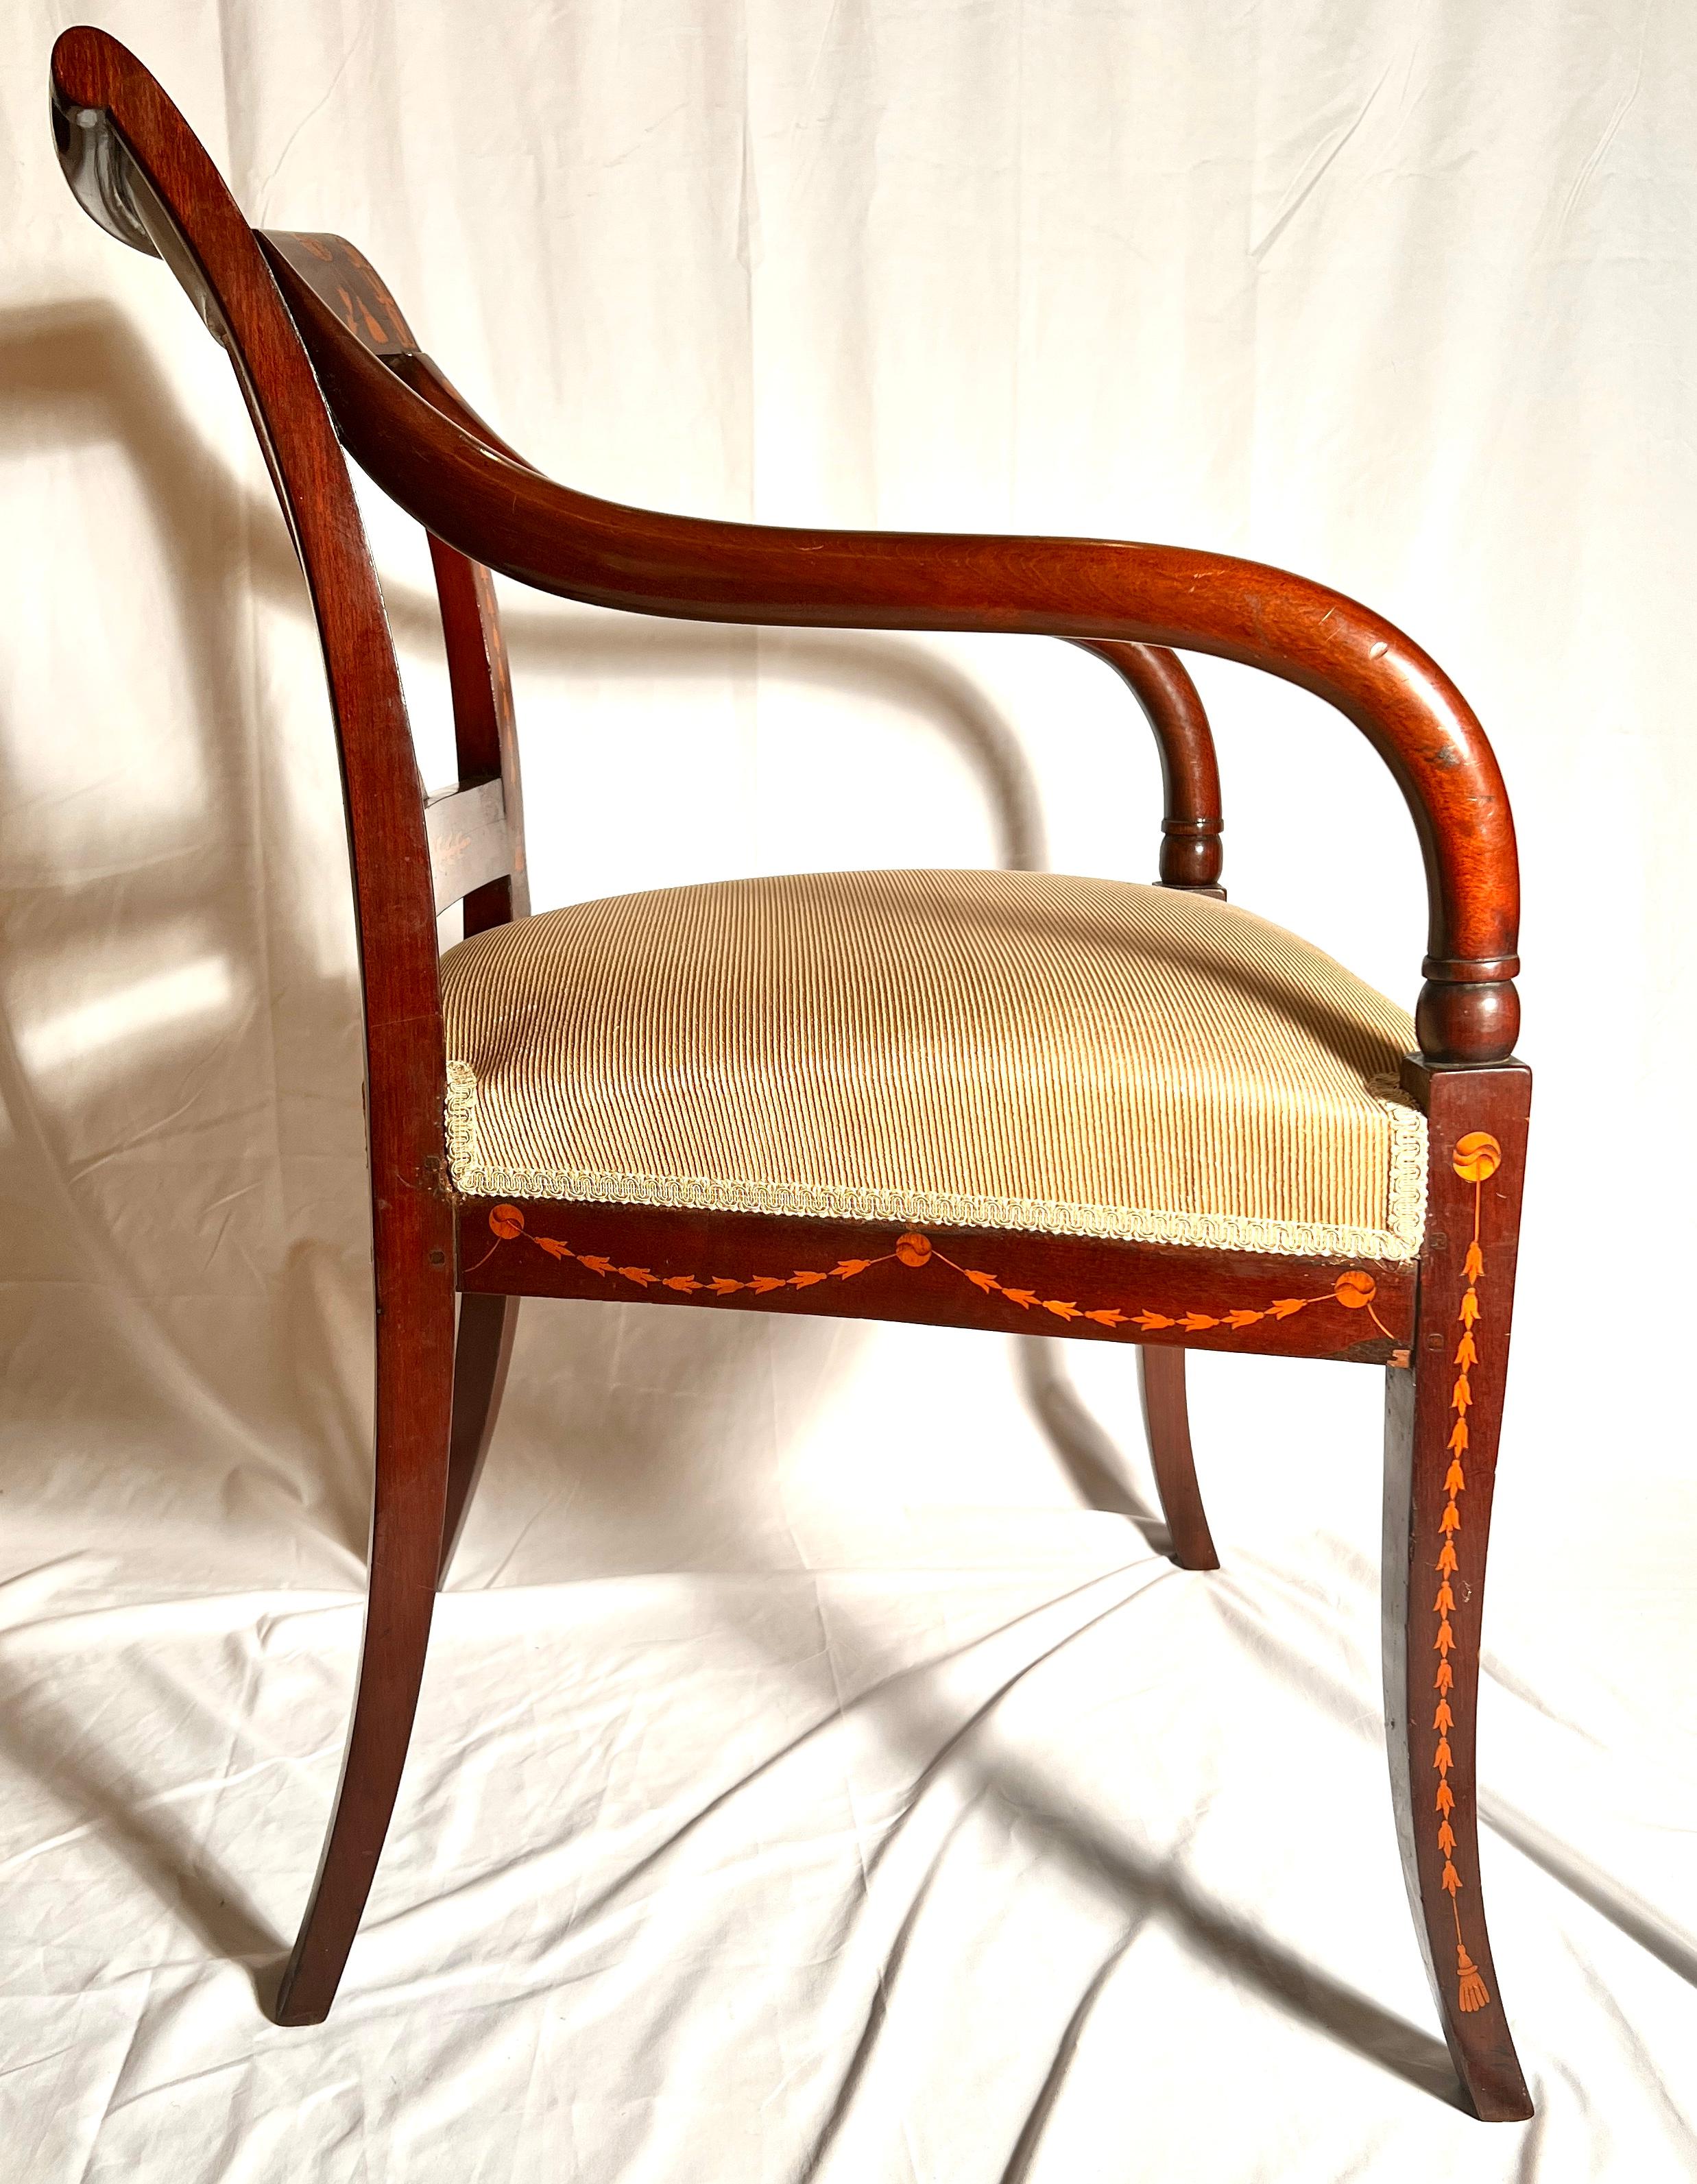 19th Century Antique Mahogany “Louis Philippe” Desk Chair Voltaire c 1830-50 For Sale